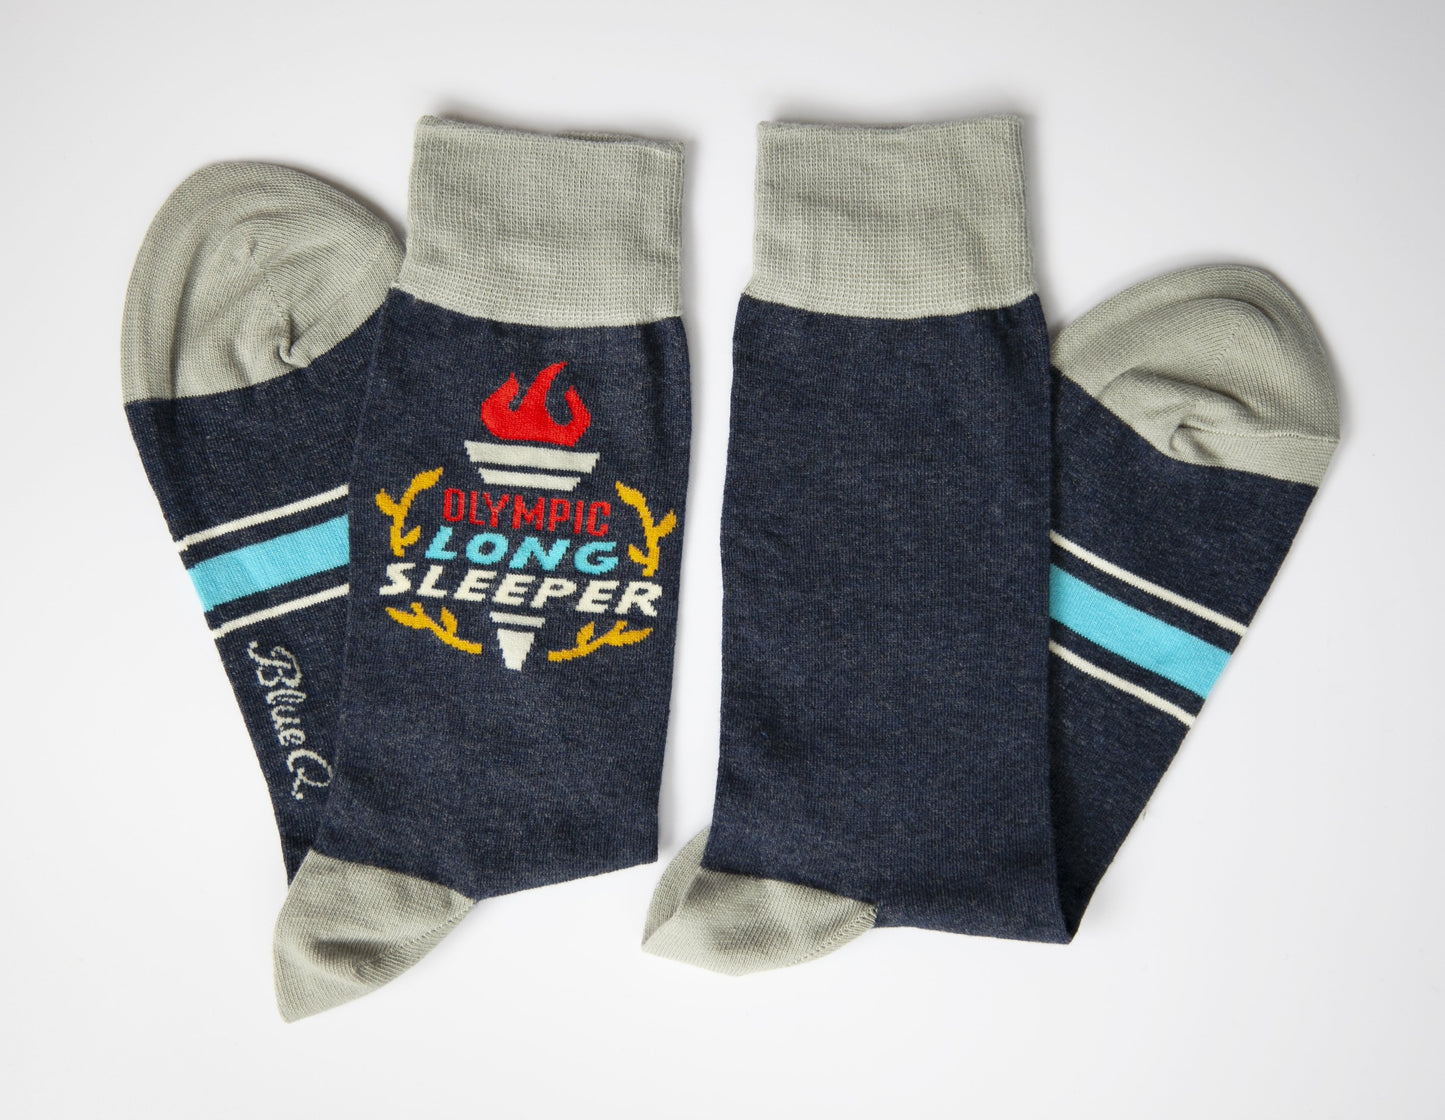 Blue Q - Men's Crew Socks - Olympic Long Sleeper